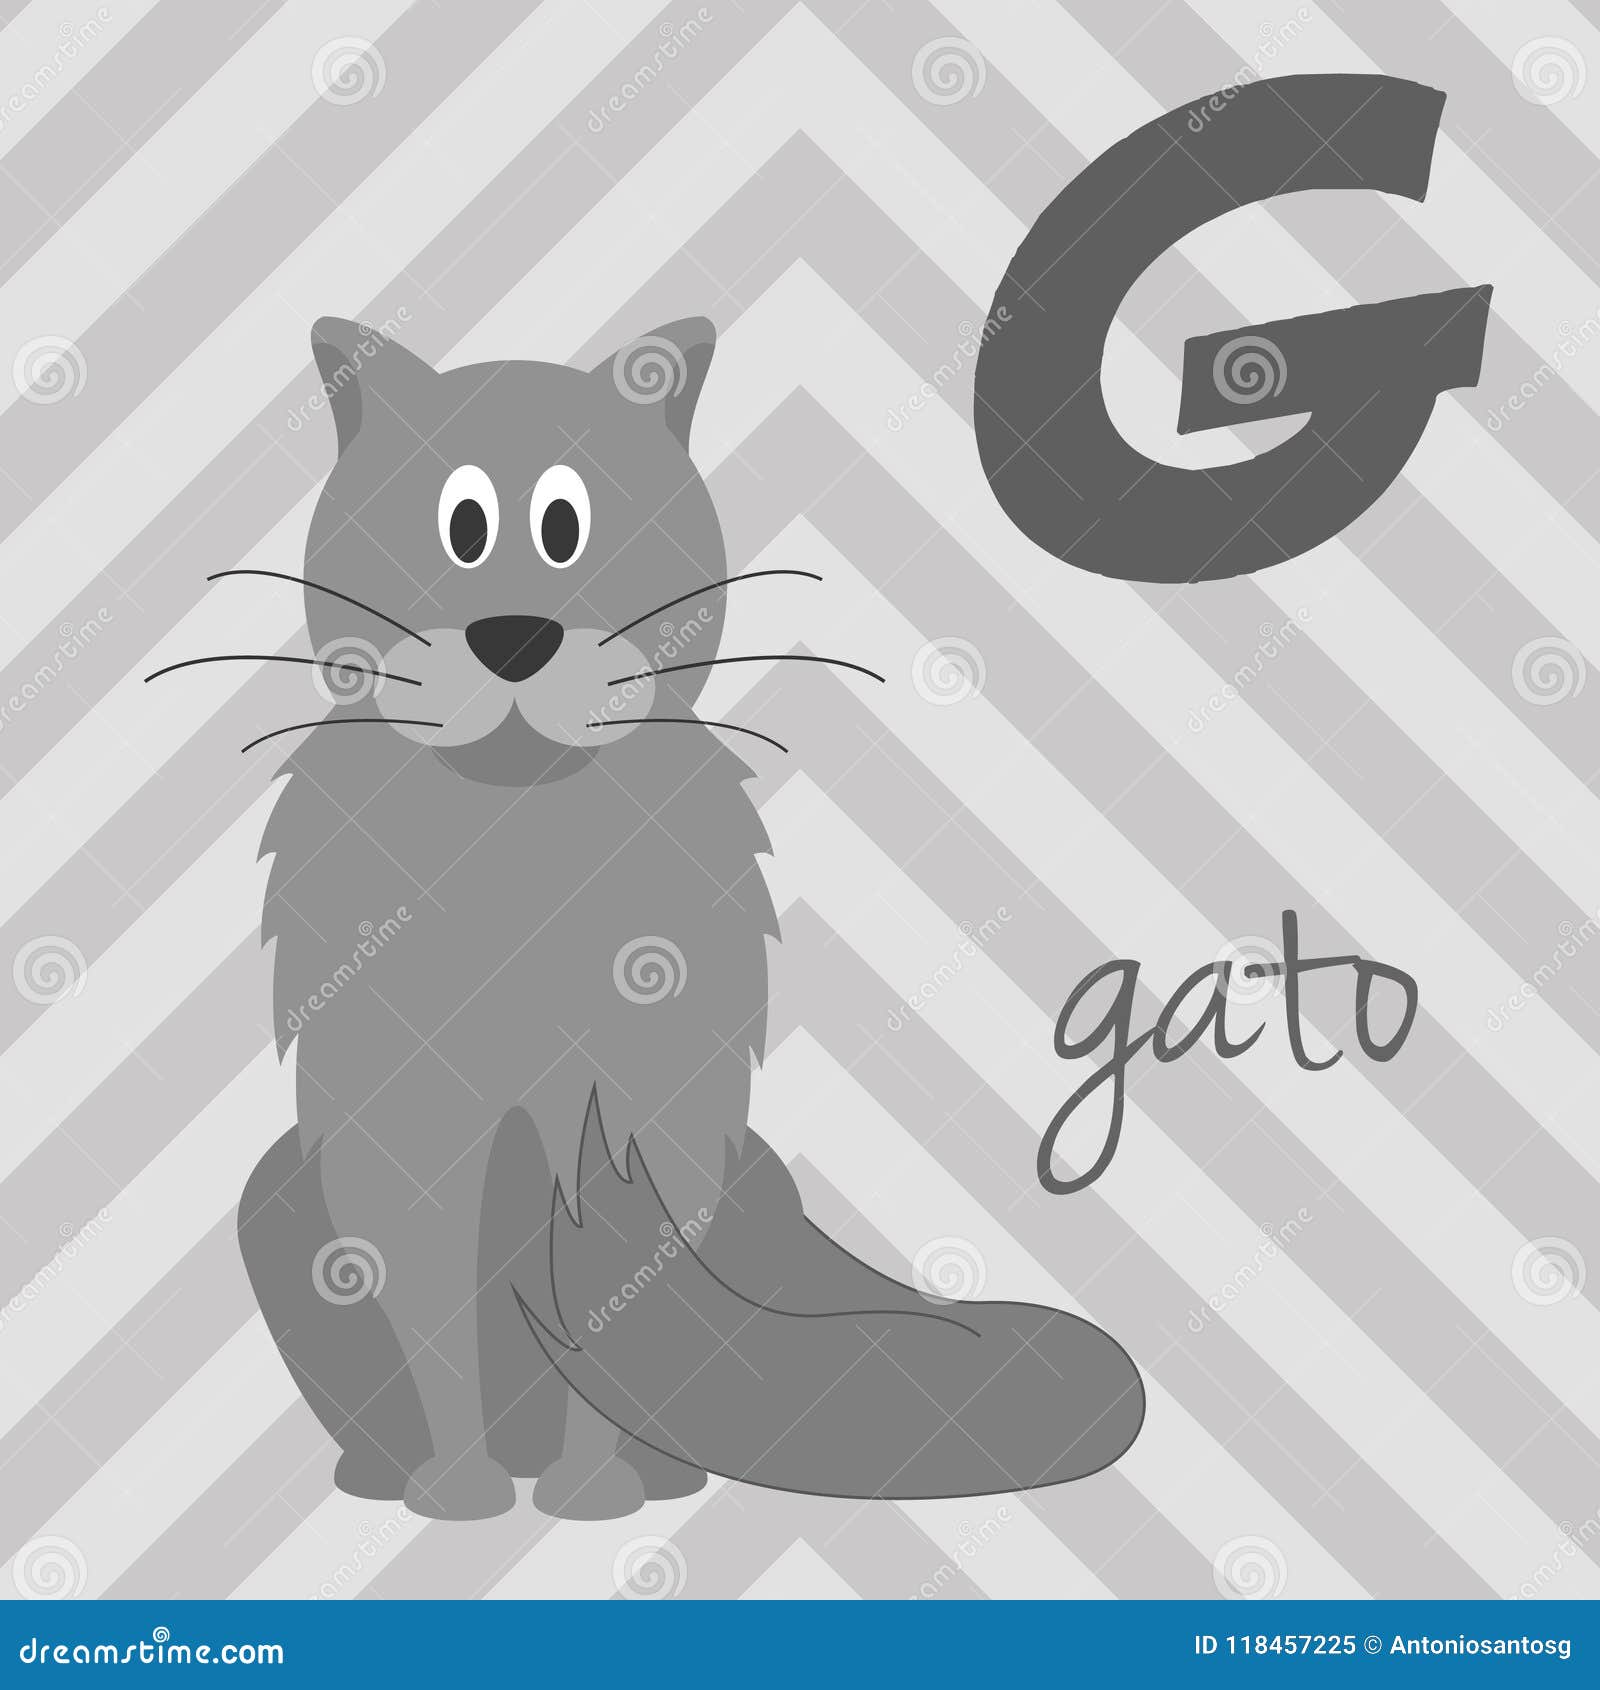 cute cartoon zoo illustrated alphabet with funny animals. spanish alphabet: g for gato.